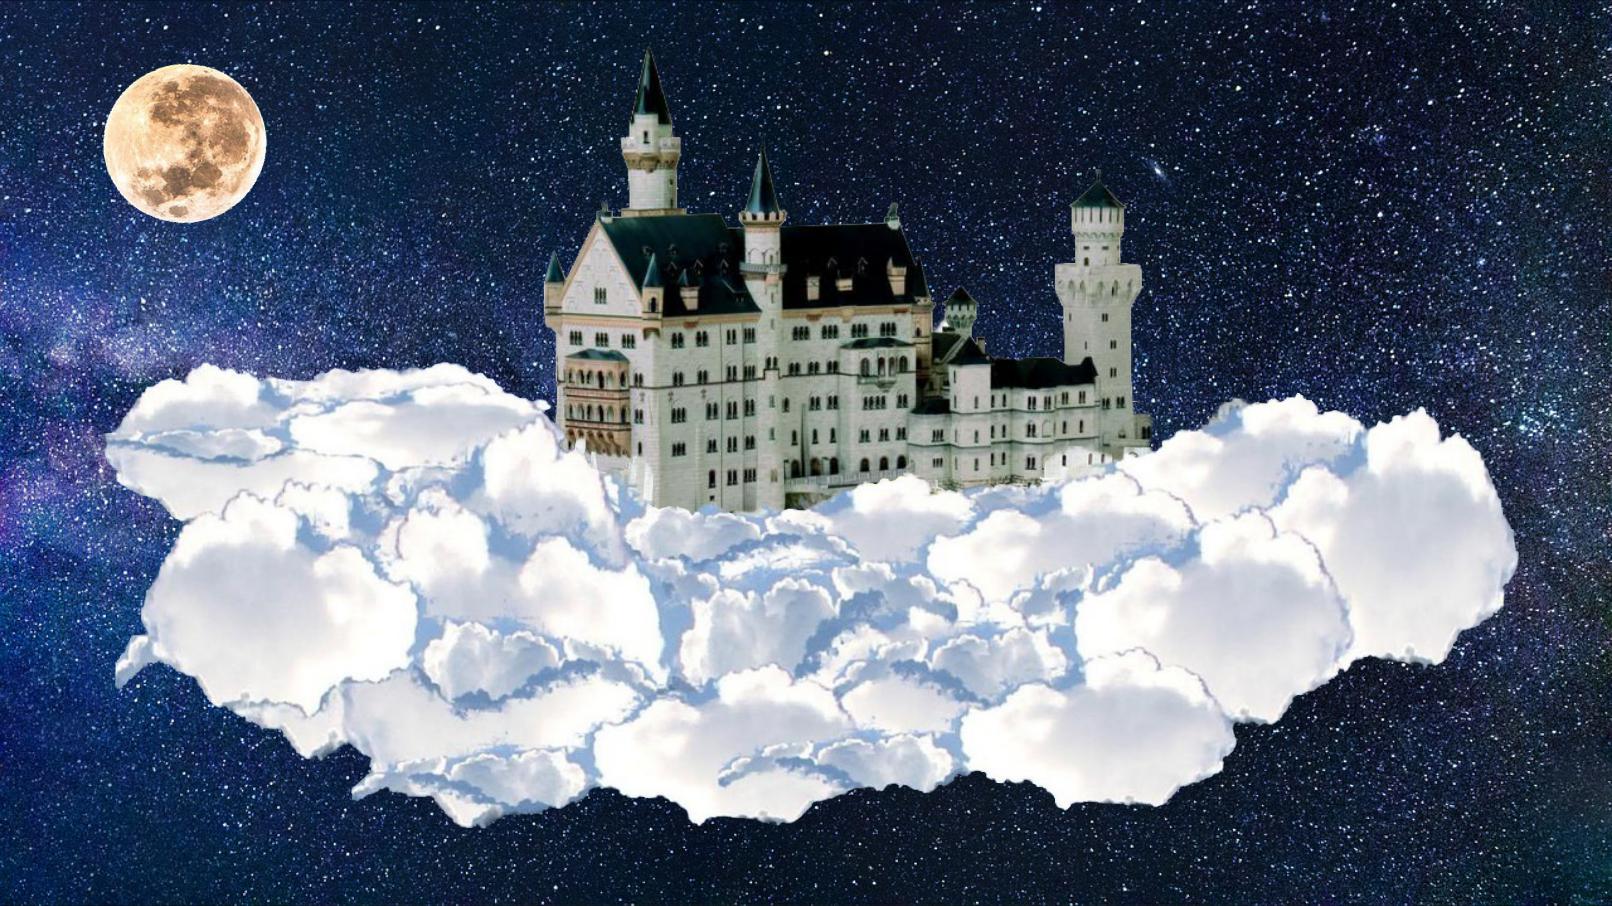 Das Schloss in den Wolken........